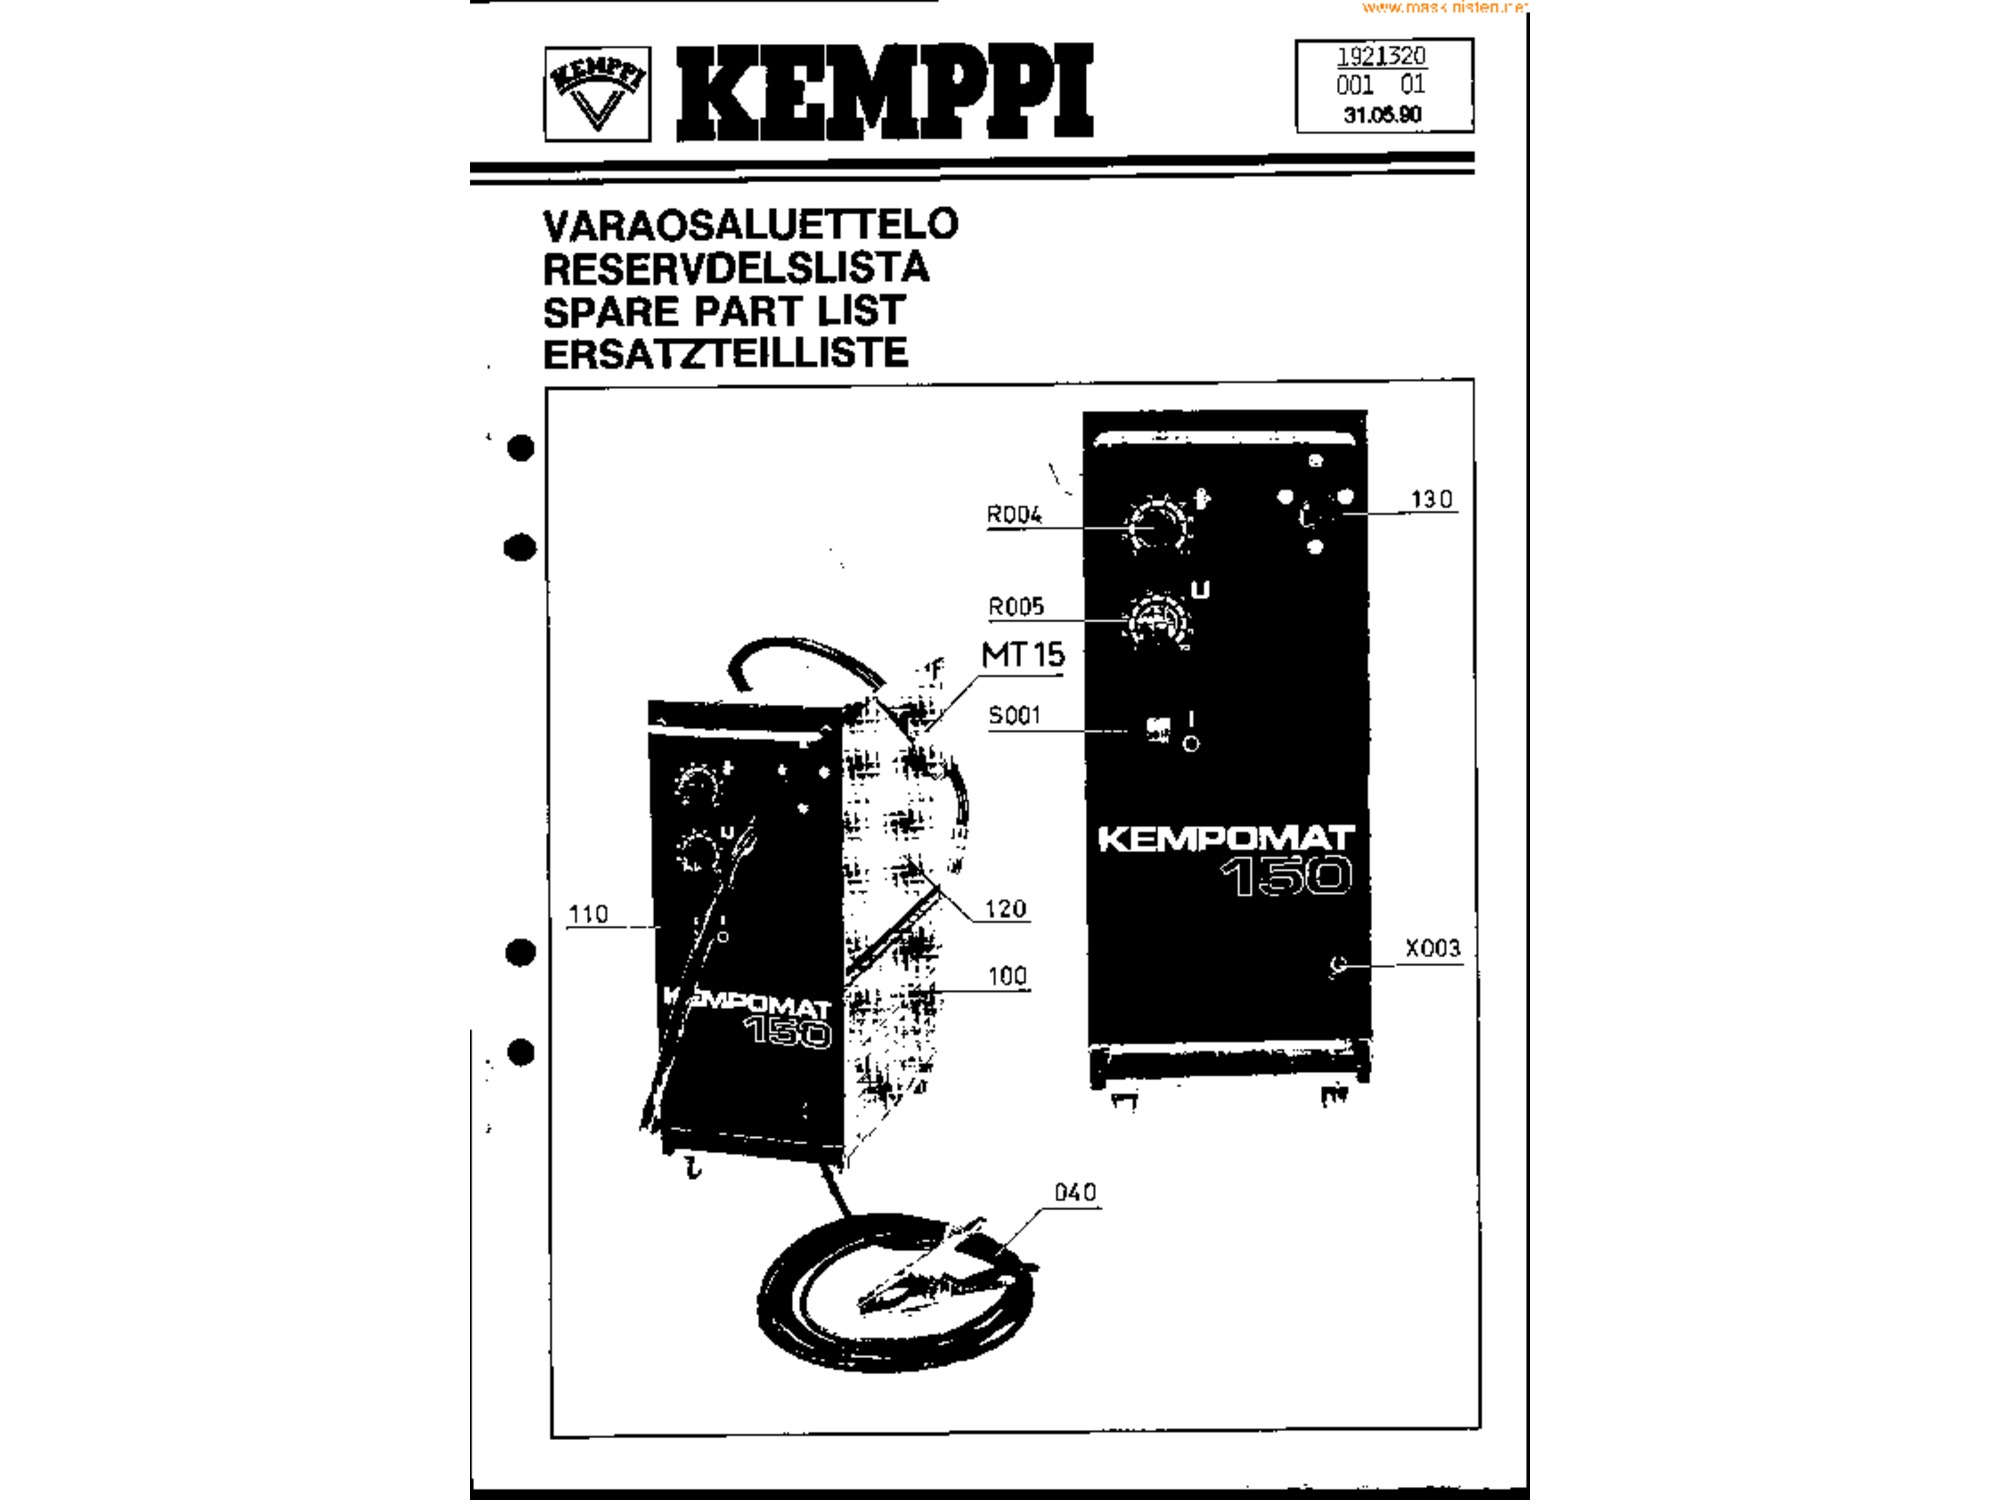 Kempomat 150 service manual binder cover